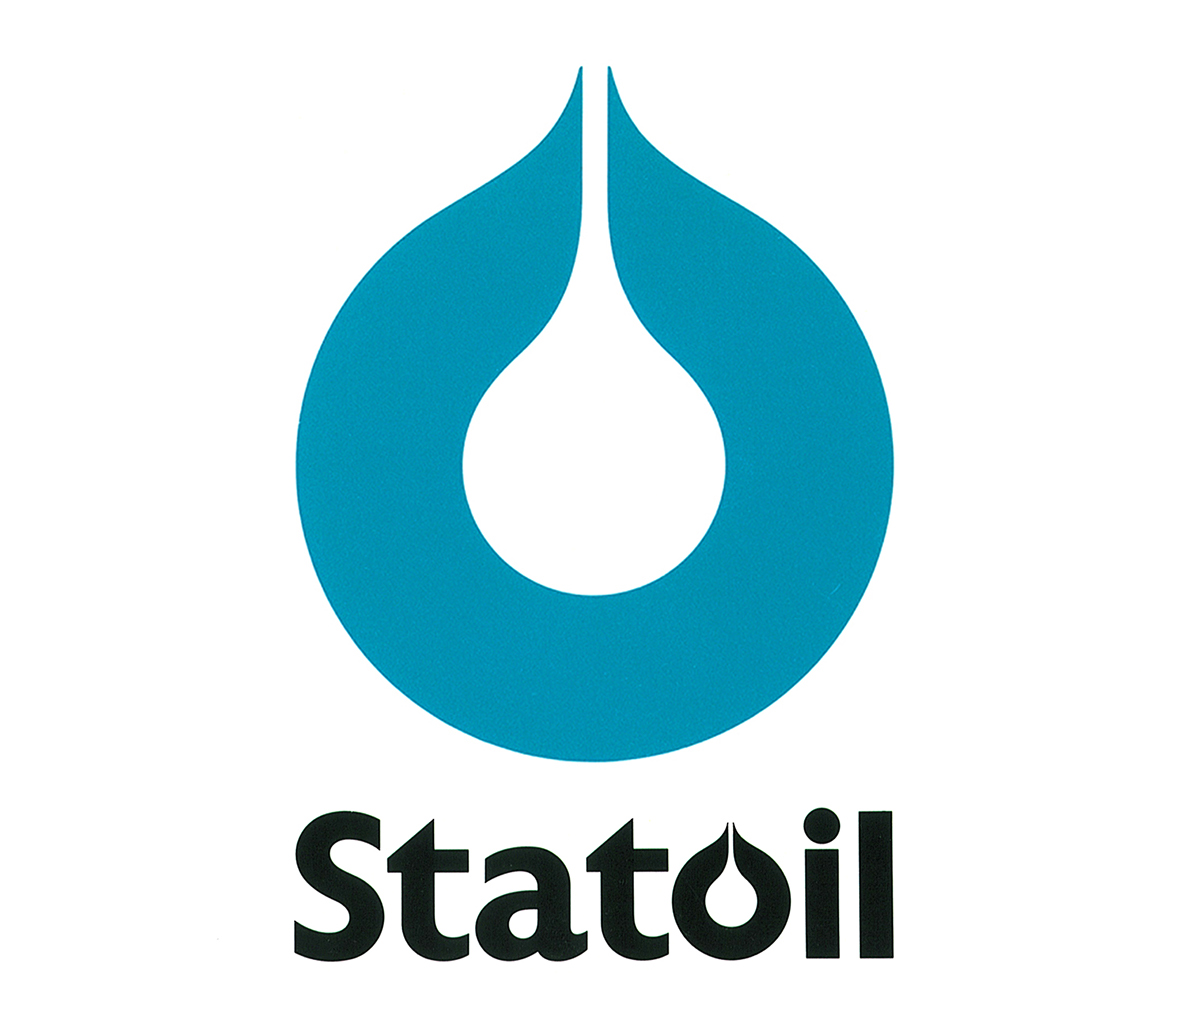 Statoil oil norway Norge stavanger grid design oslo olje Petrolium Nordsjøen Pentagram mervyn kurlansky Reidar Holtskog